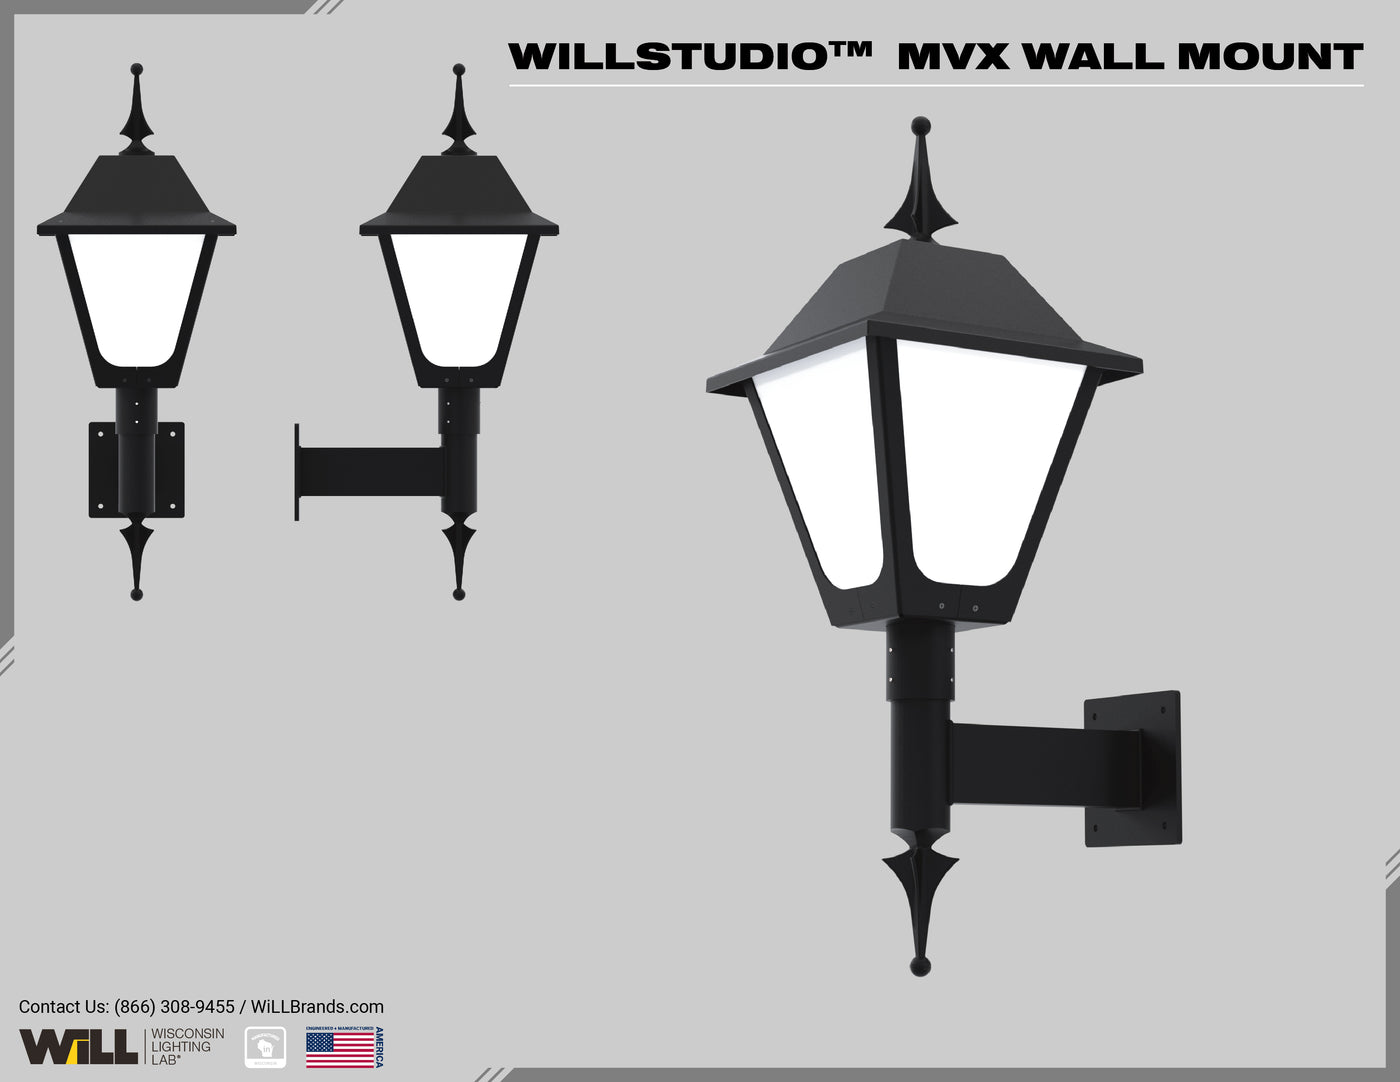 WiLLSTUDIO MVX WALL MOUNT